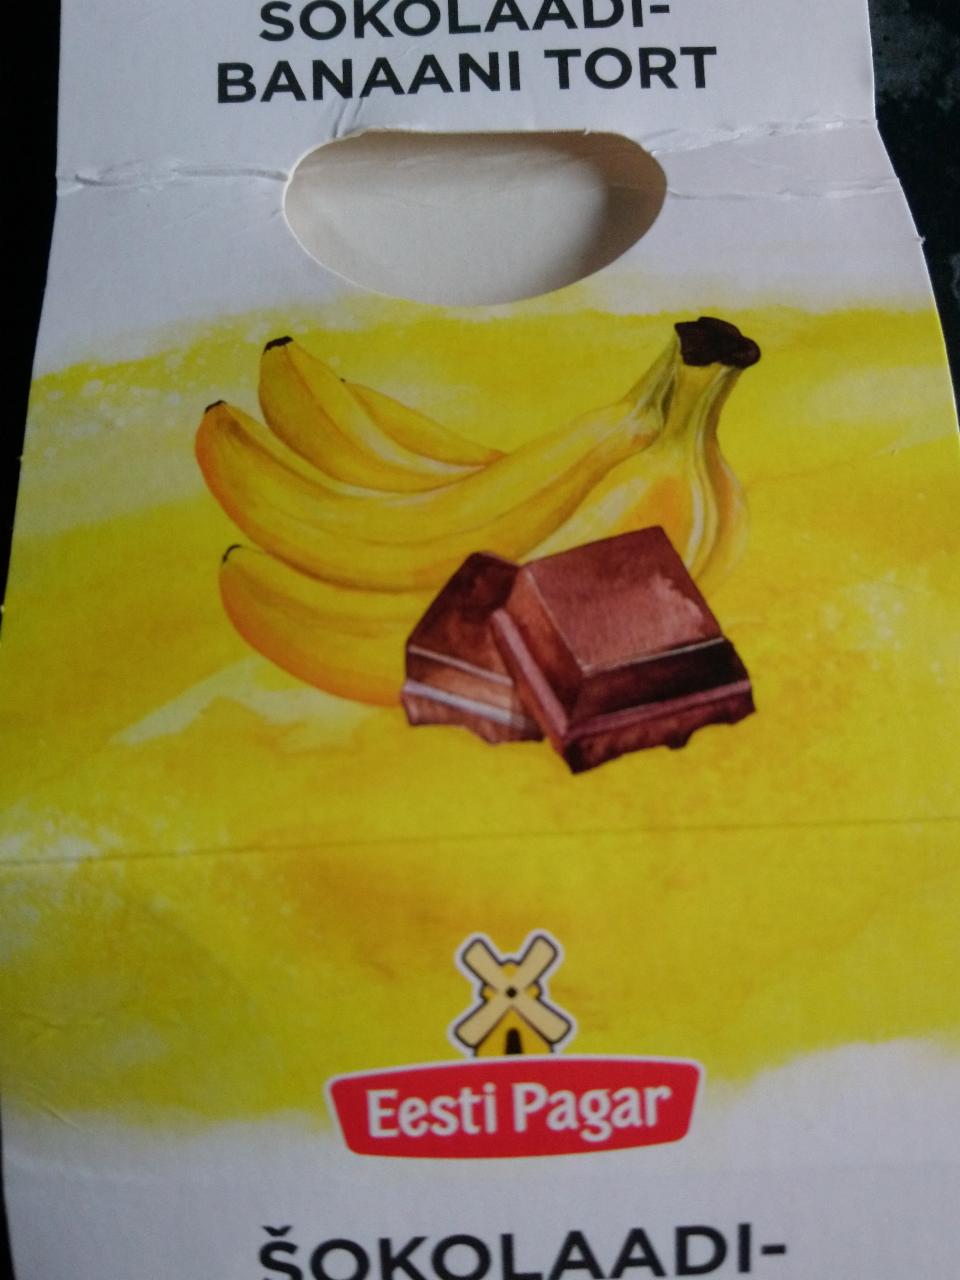 Фото - шоколадно-банановй десерт Eesti pagar